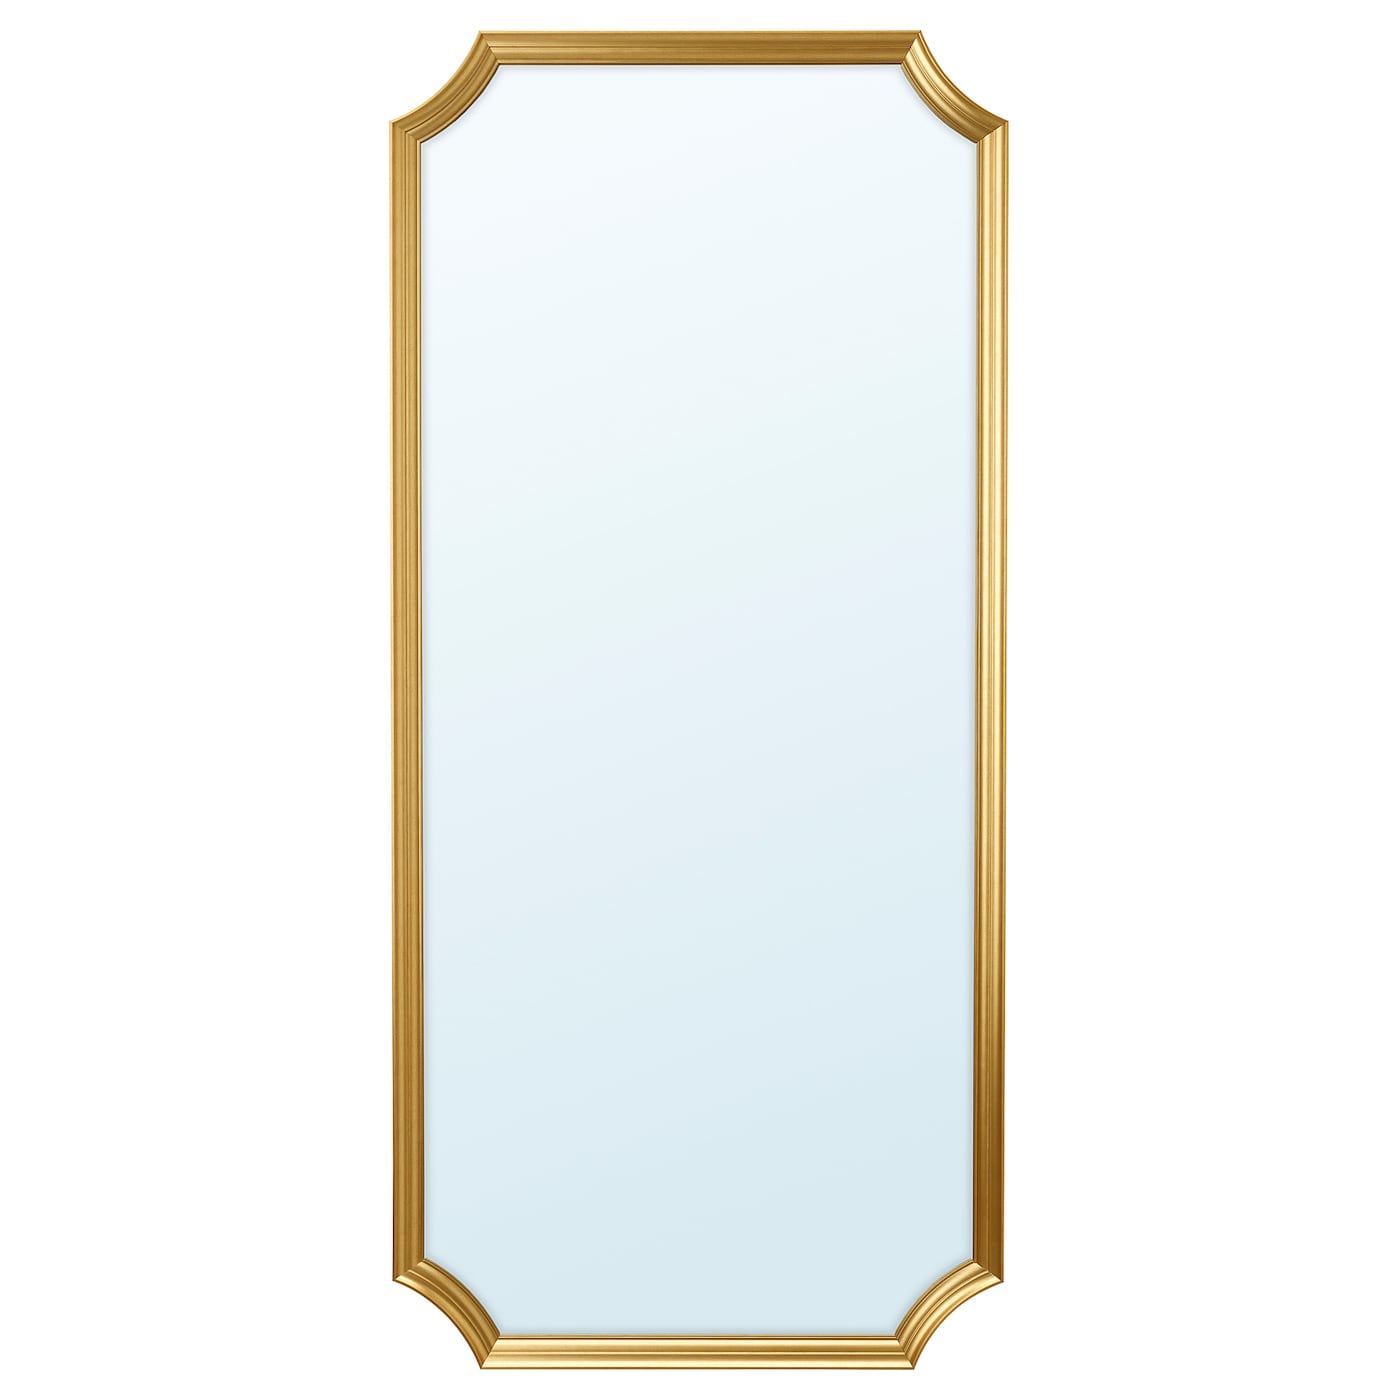 svansele-mirror-gold__0898210_pe813213_s5.jpg